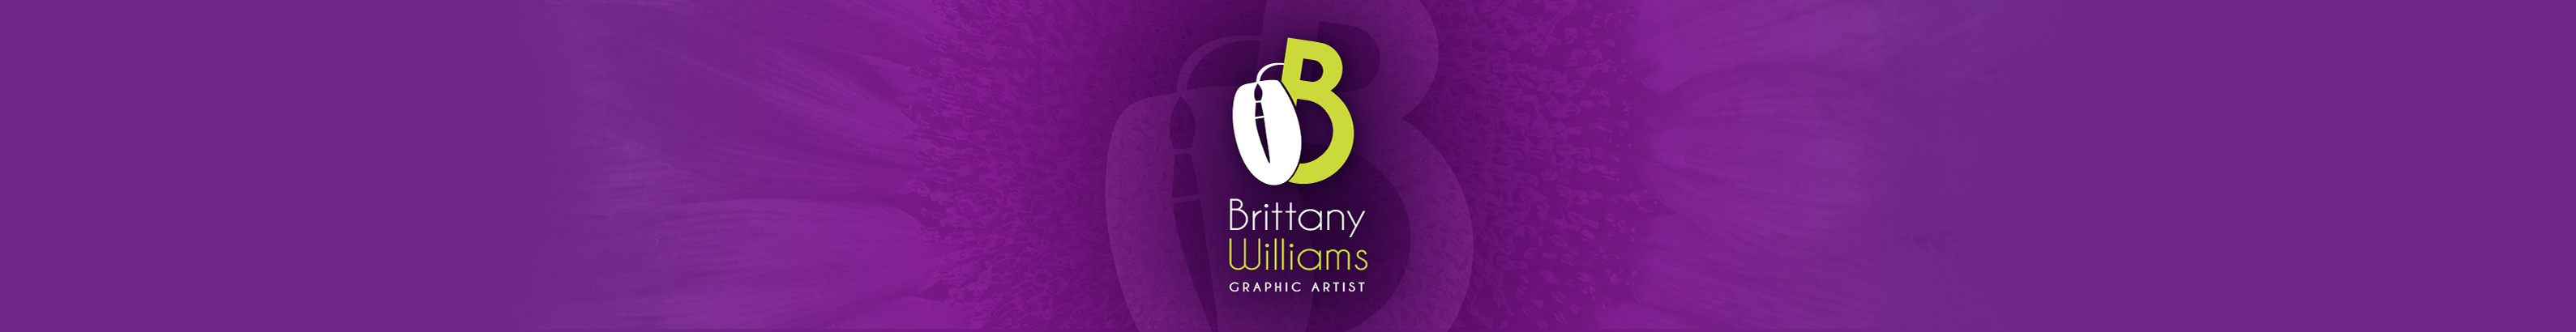 Brittany Williams's profile banner